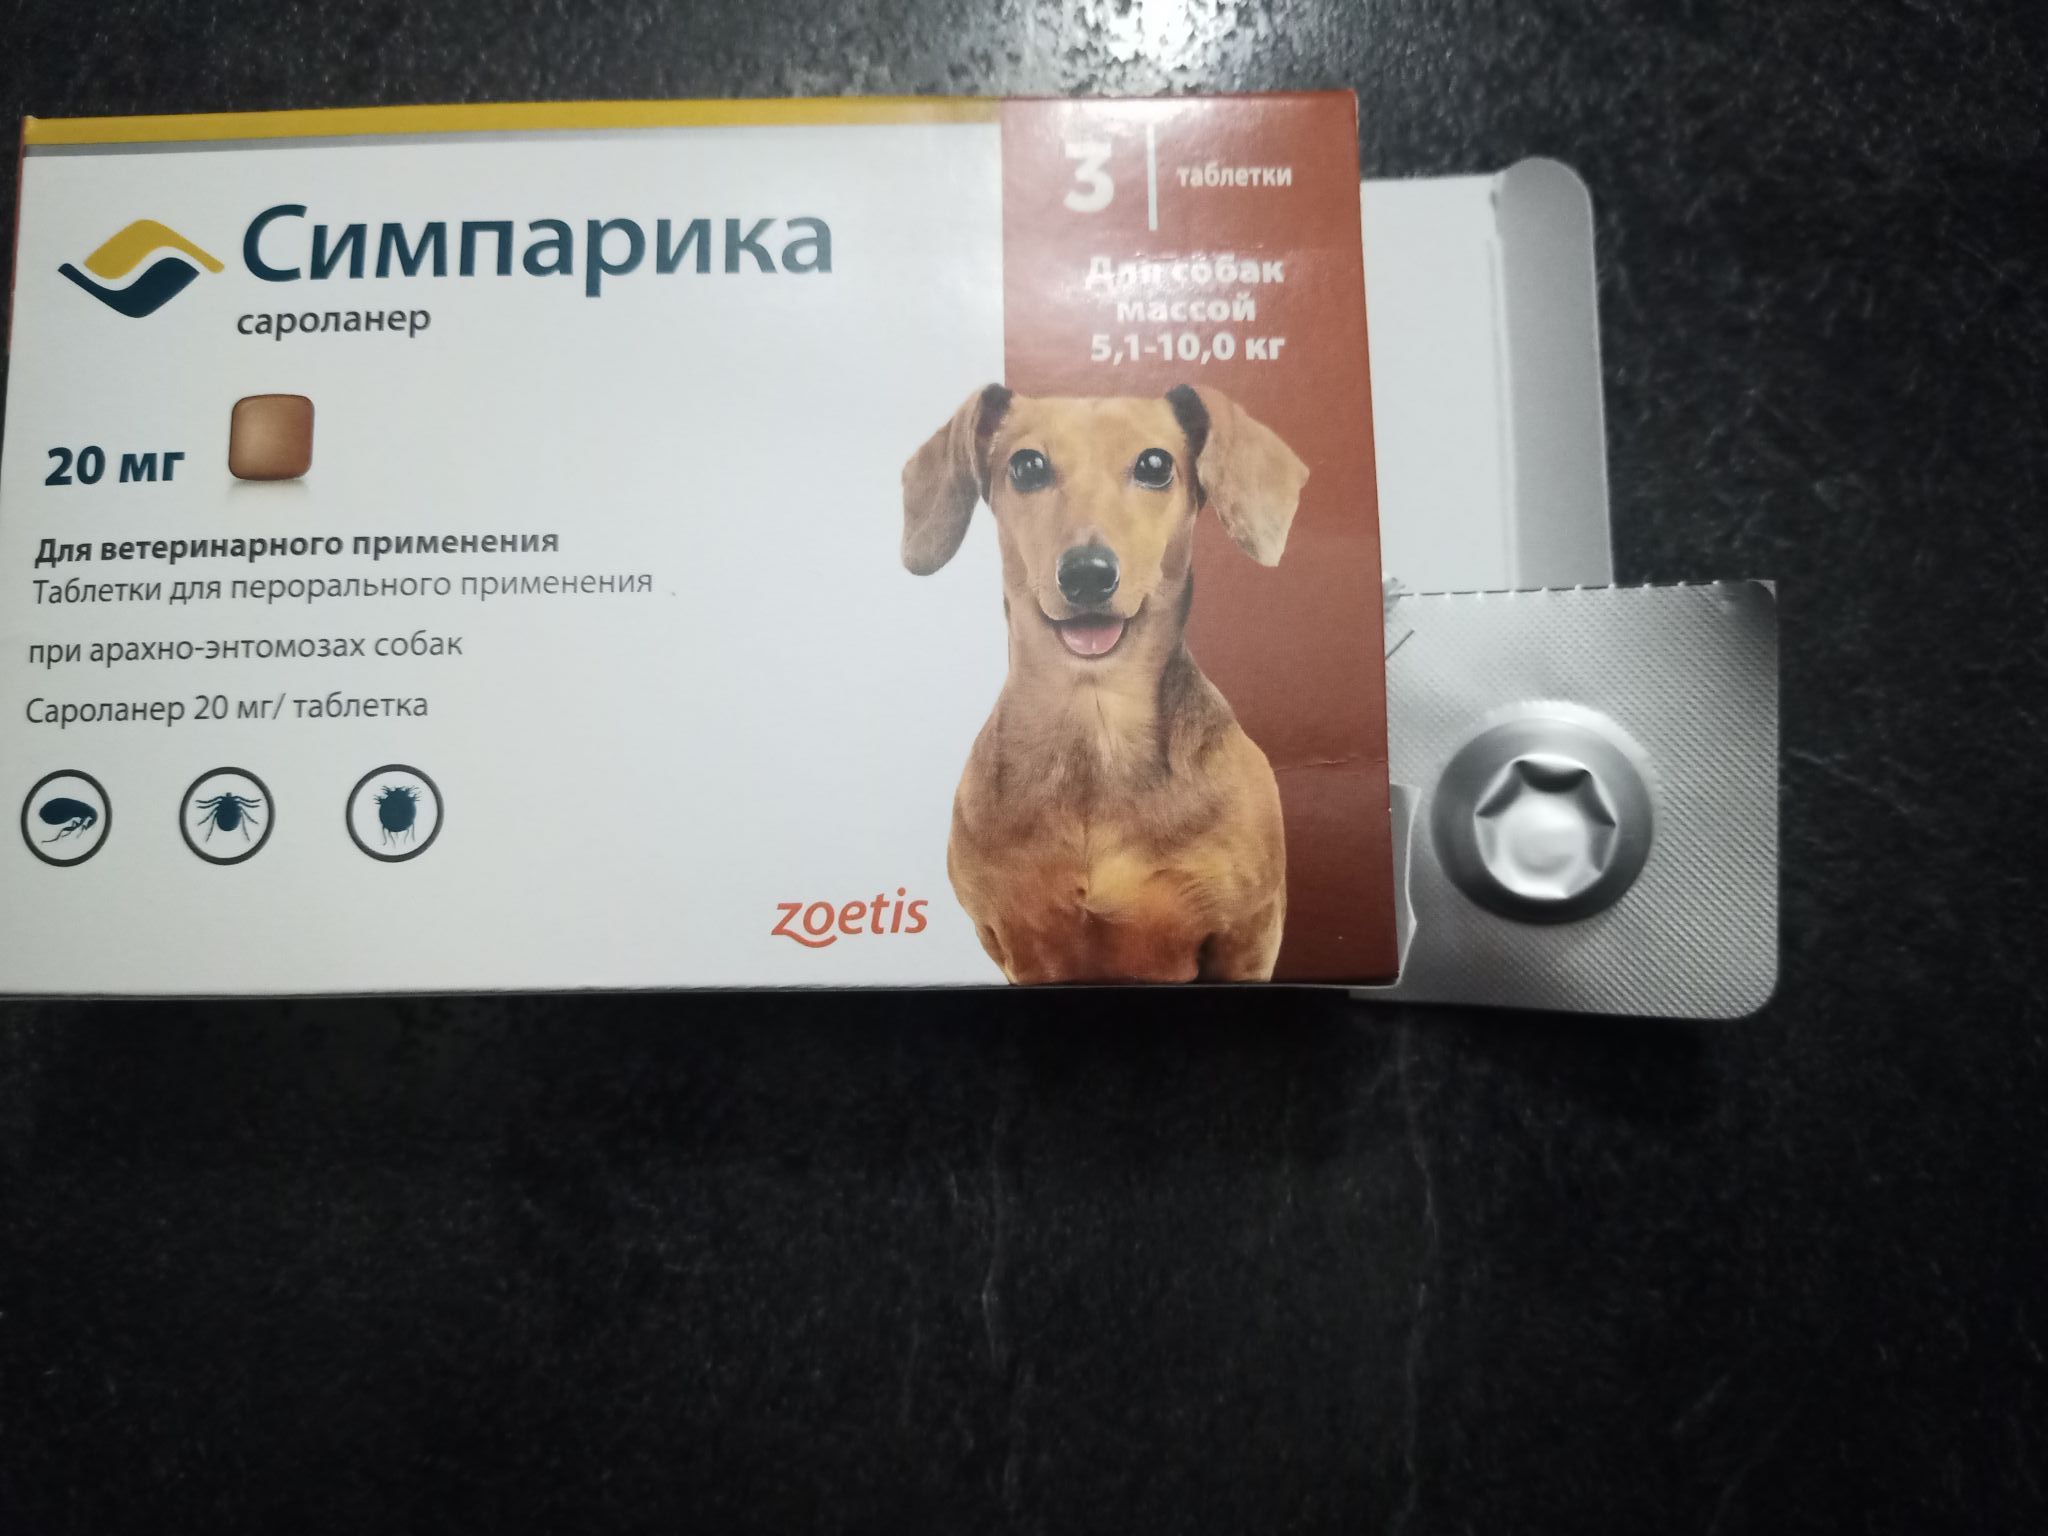 Симпарика срок действия таблетки для собак. В продаже появилась Бравекто и Симпарика объявление.